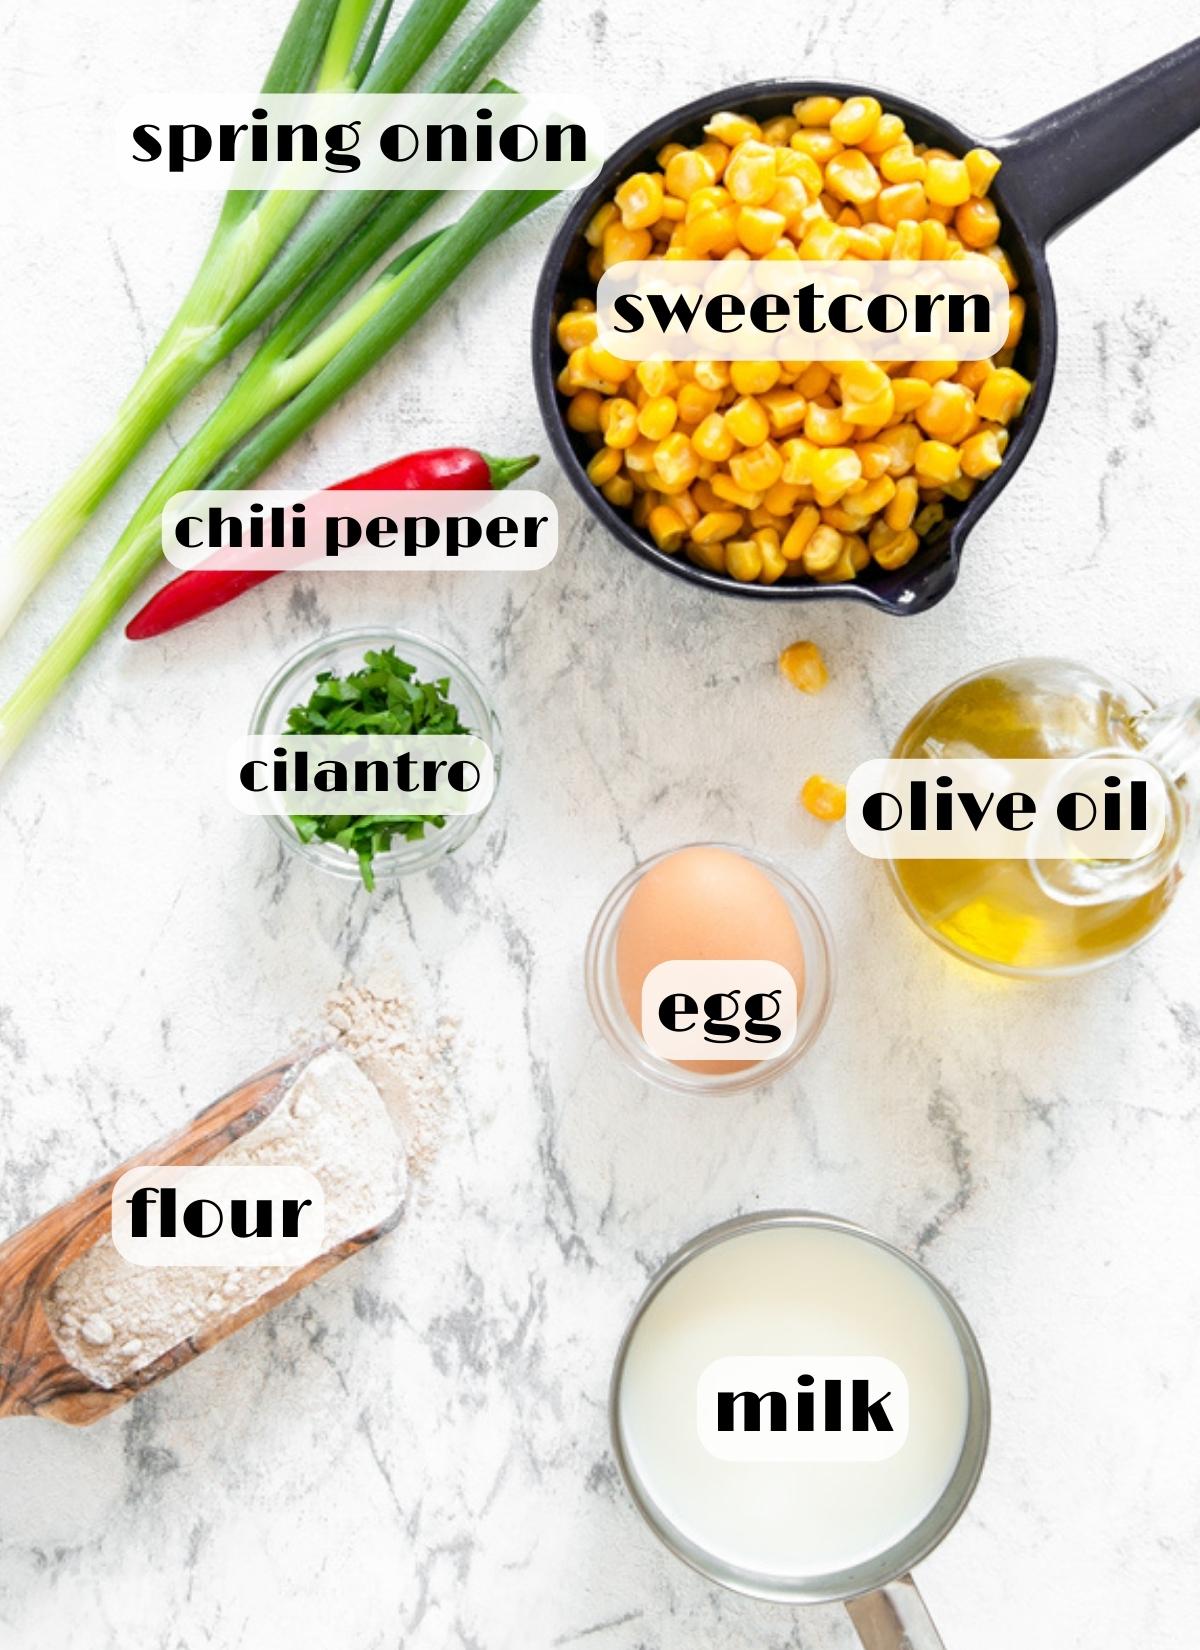 sweetcorn fritters ingredients: sweetcorn, spring onion, cilantro, chili, oil, egg, flour, milk.